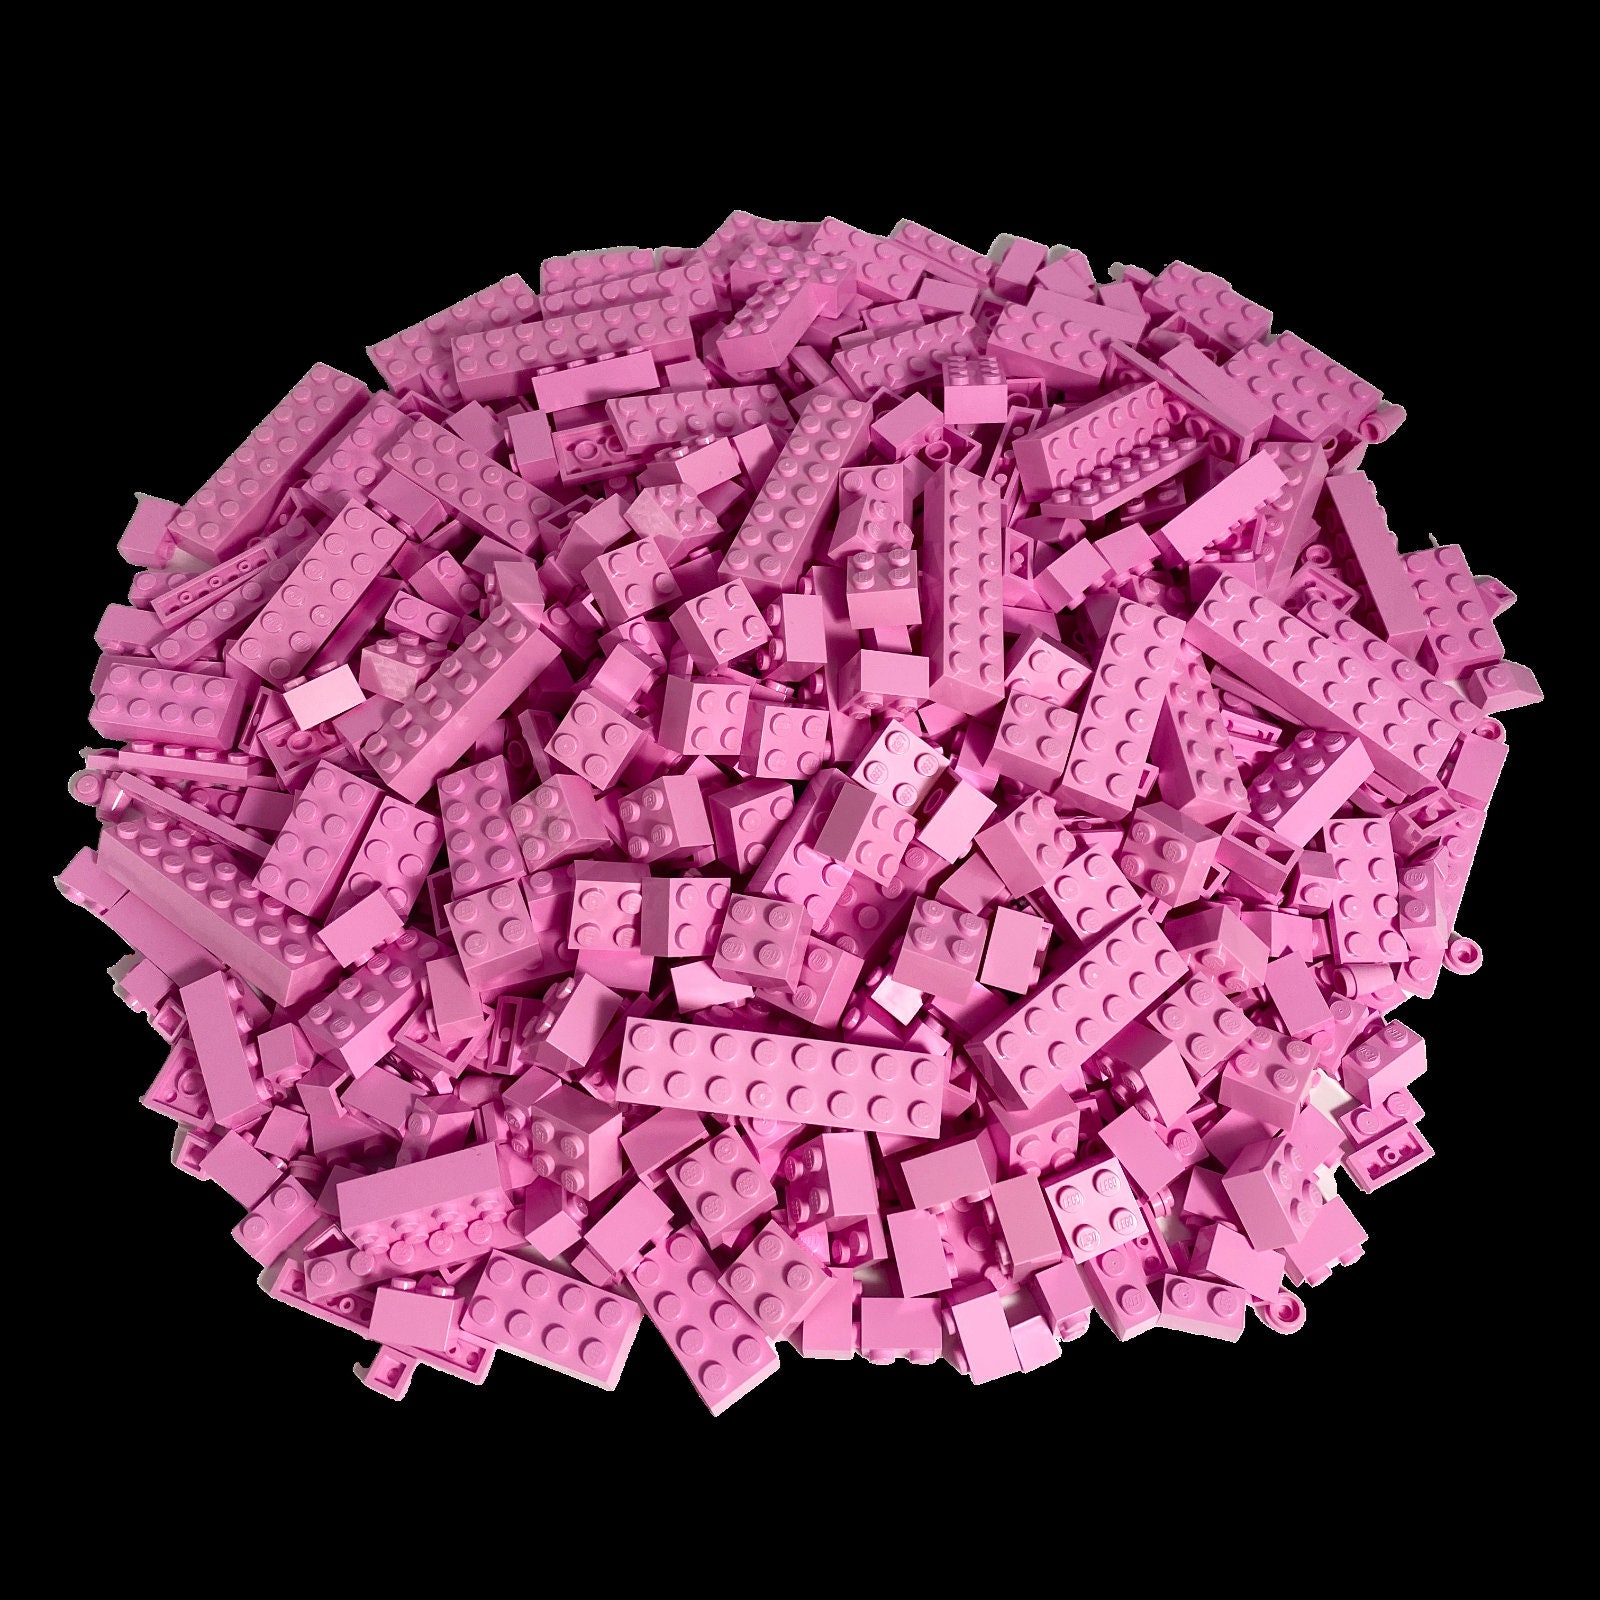 35 Pink and Purple Lego Bricks and Plates Light N Dark Pink, Dark Purple,  Light Lavender Bulk Parts & Pieces Lot 